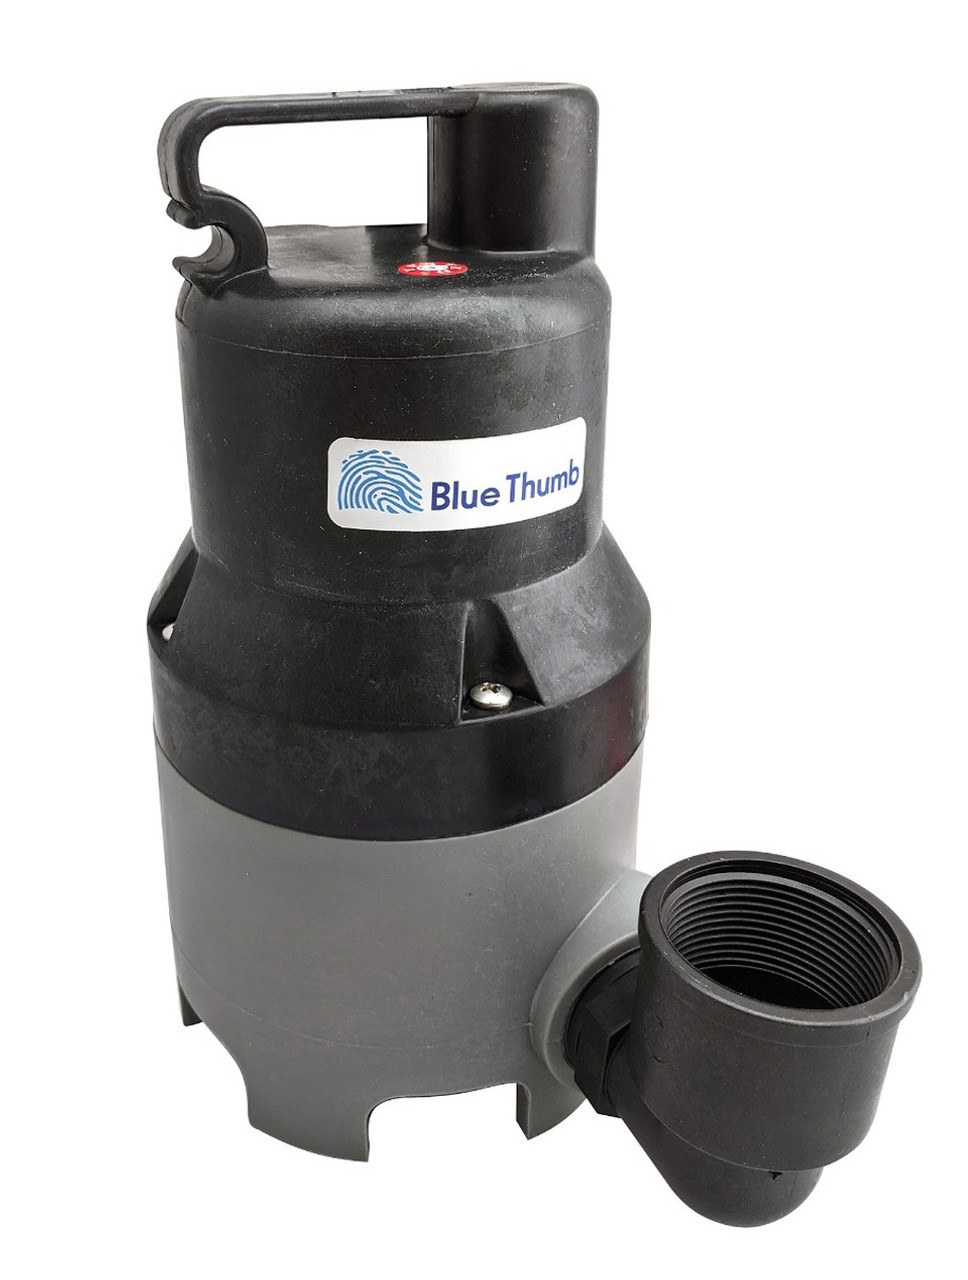 Blue Thumb Solid Handling Pump (FREE SHIPPING)